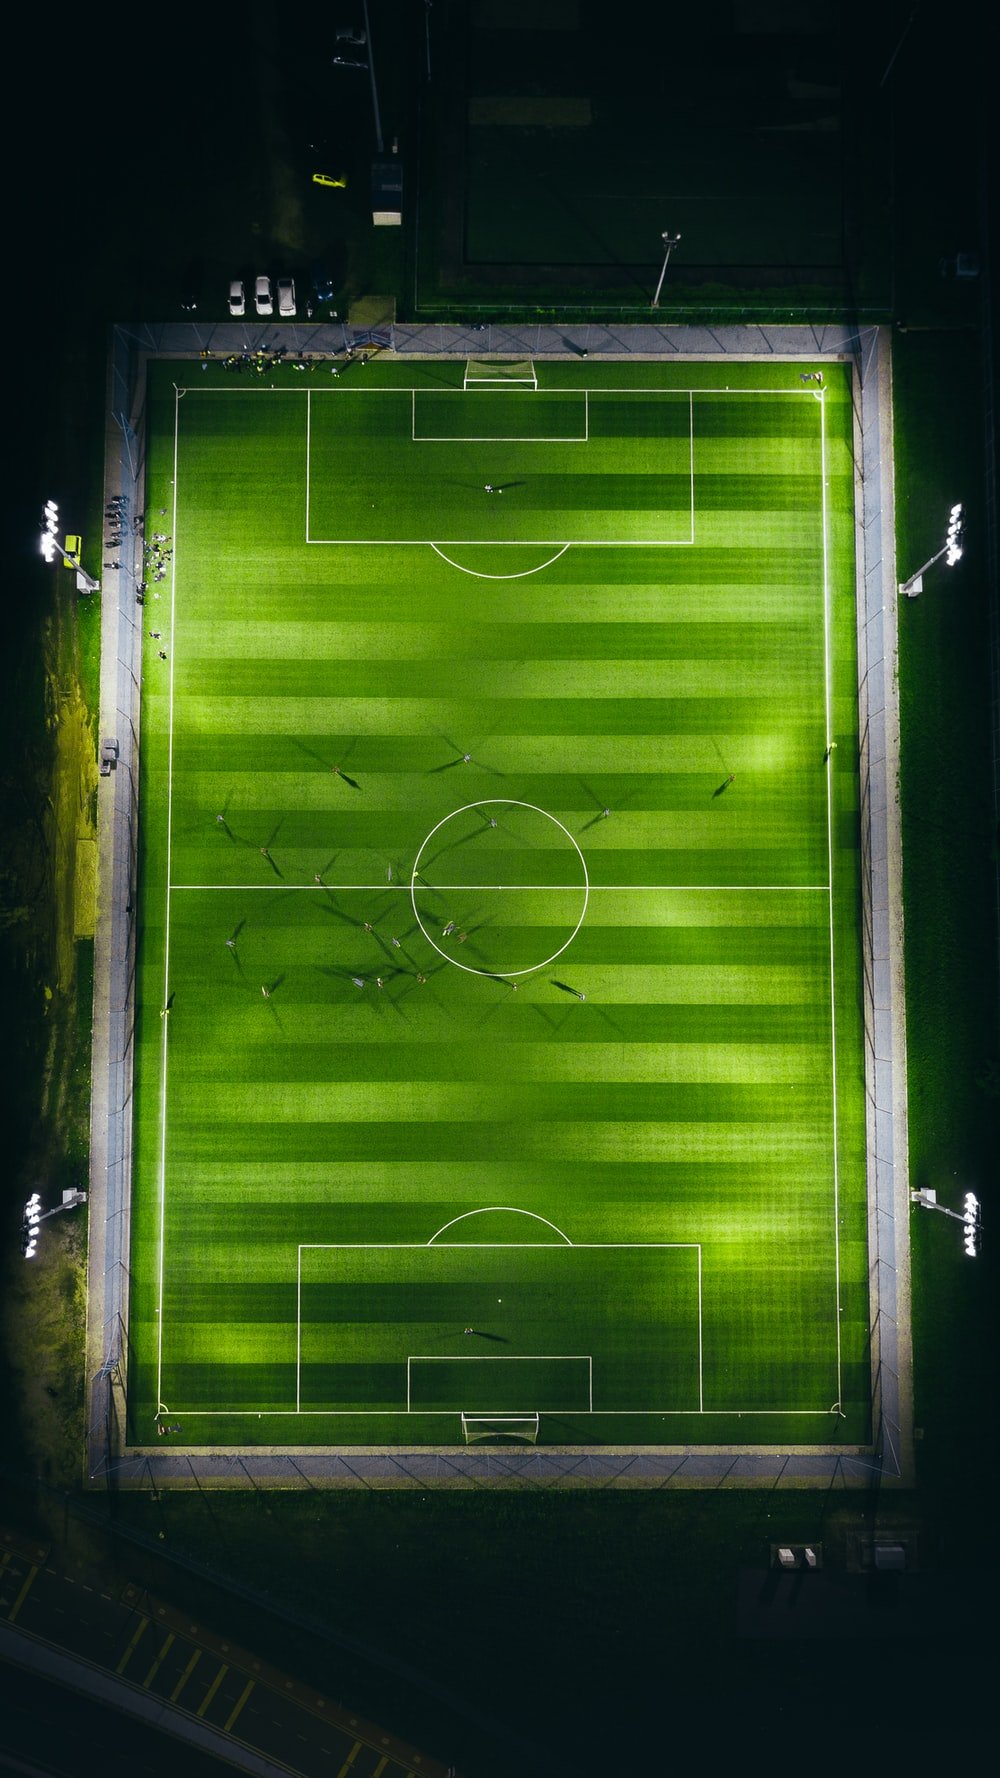 Stadium Light Picture. Download Free Image